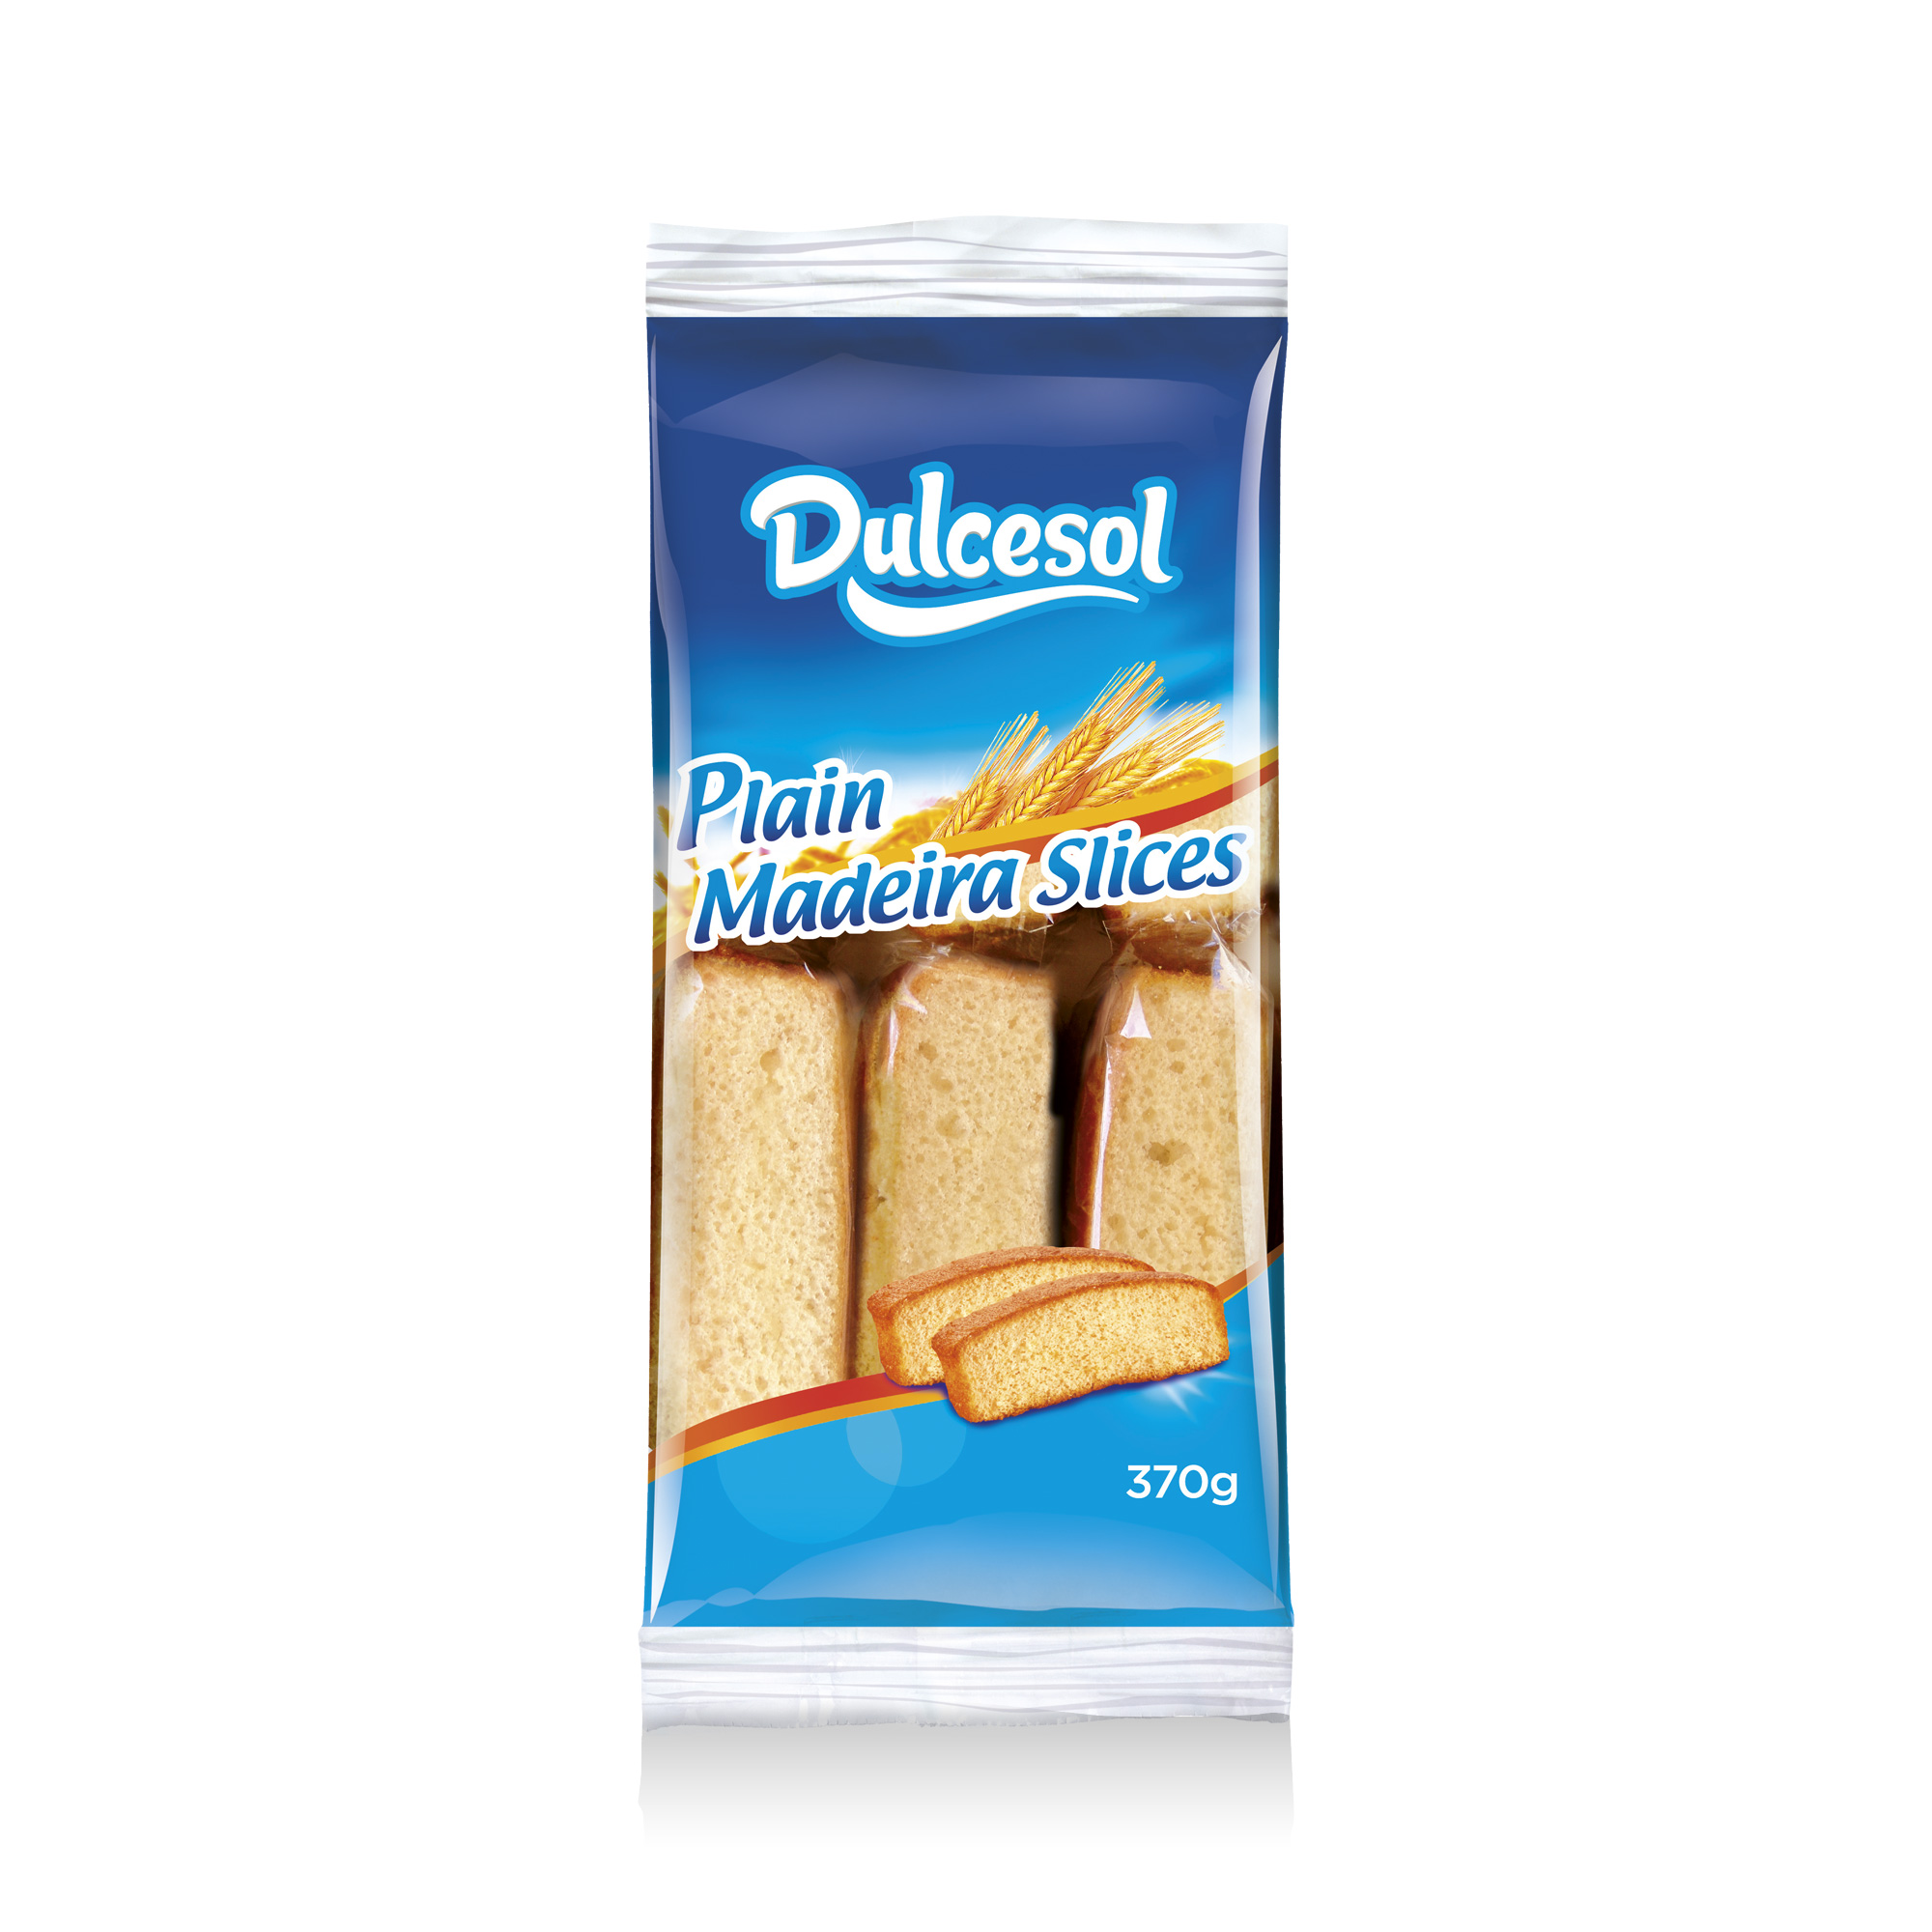 Dulcesol Plain Madeira Slices